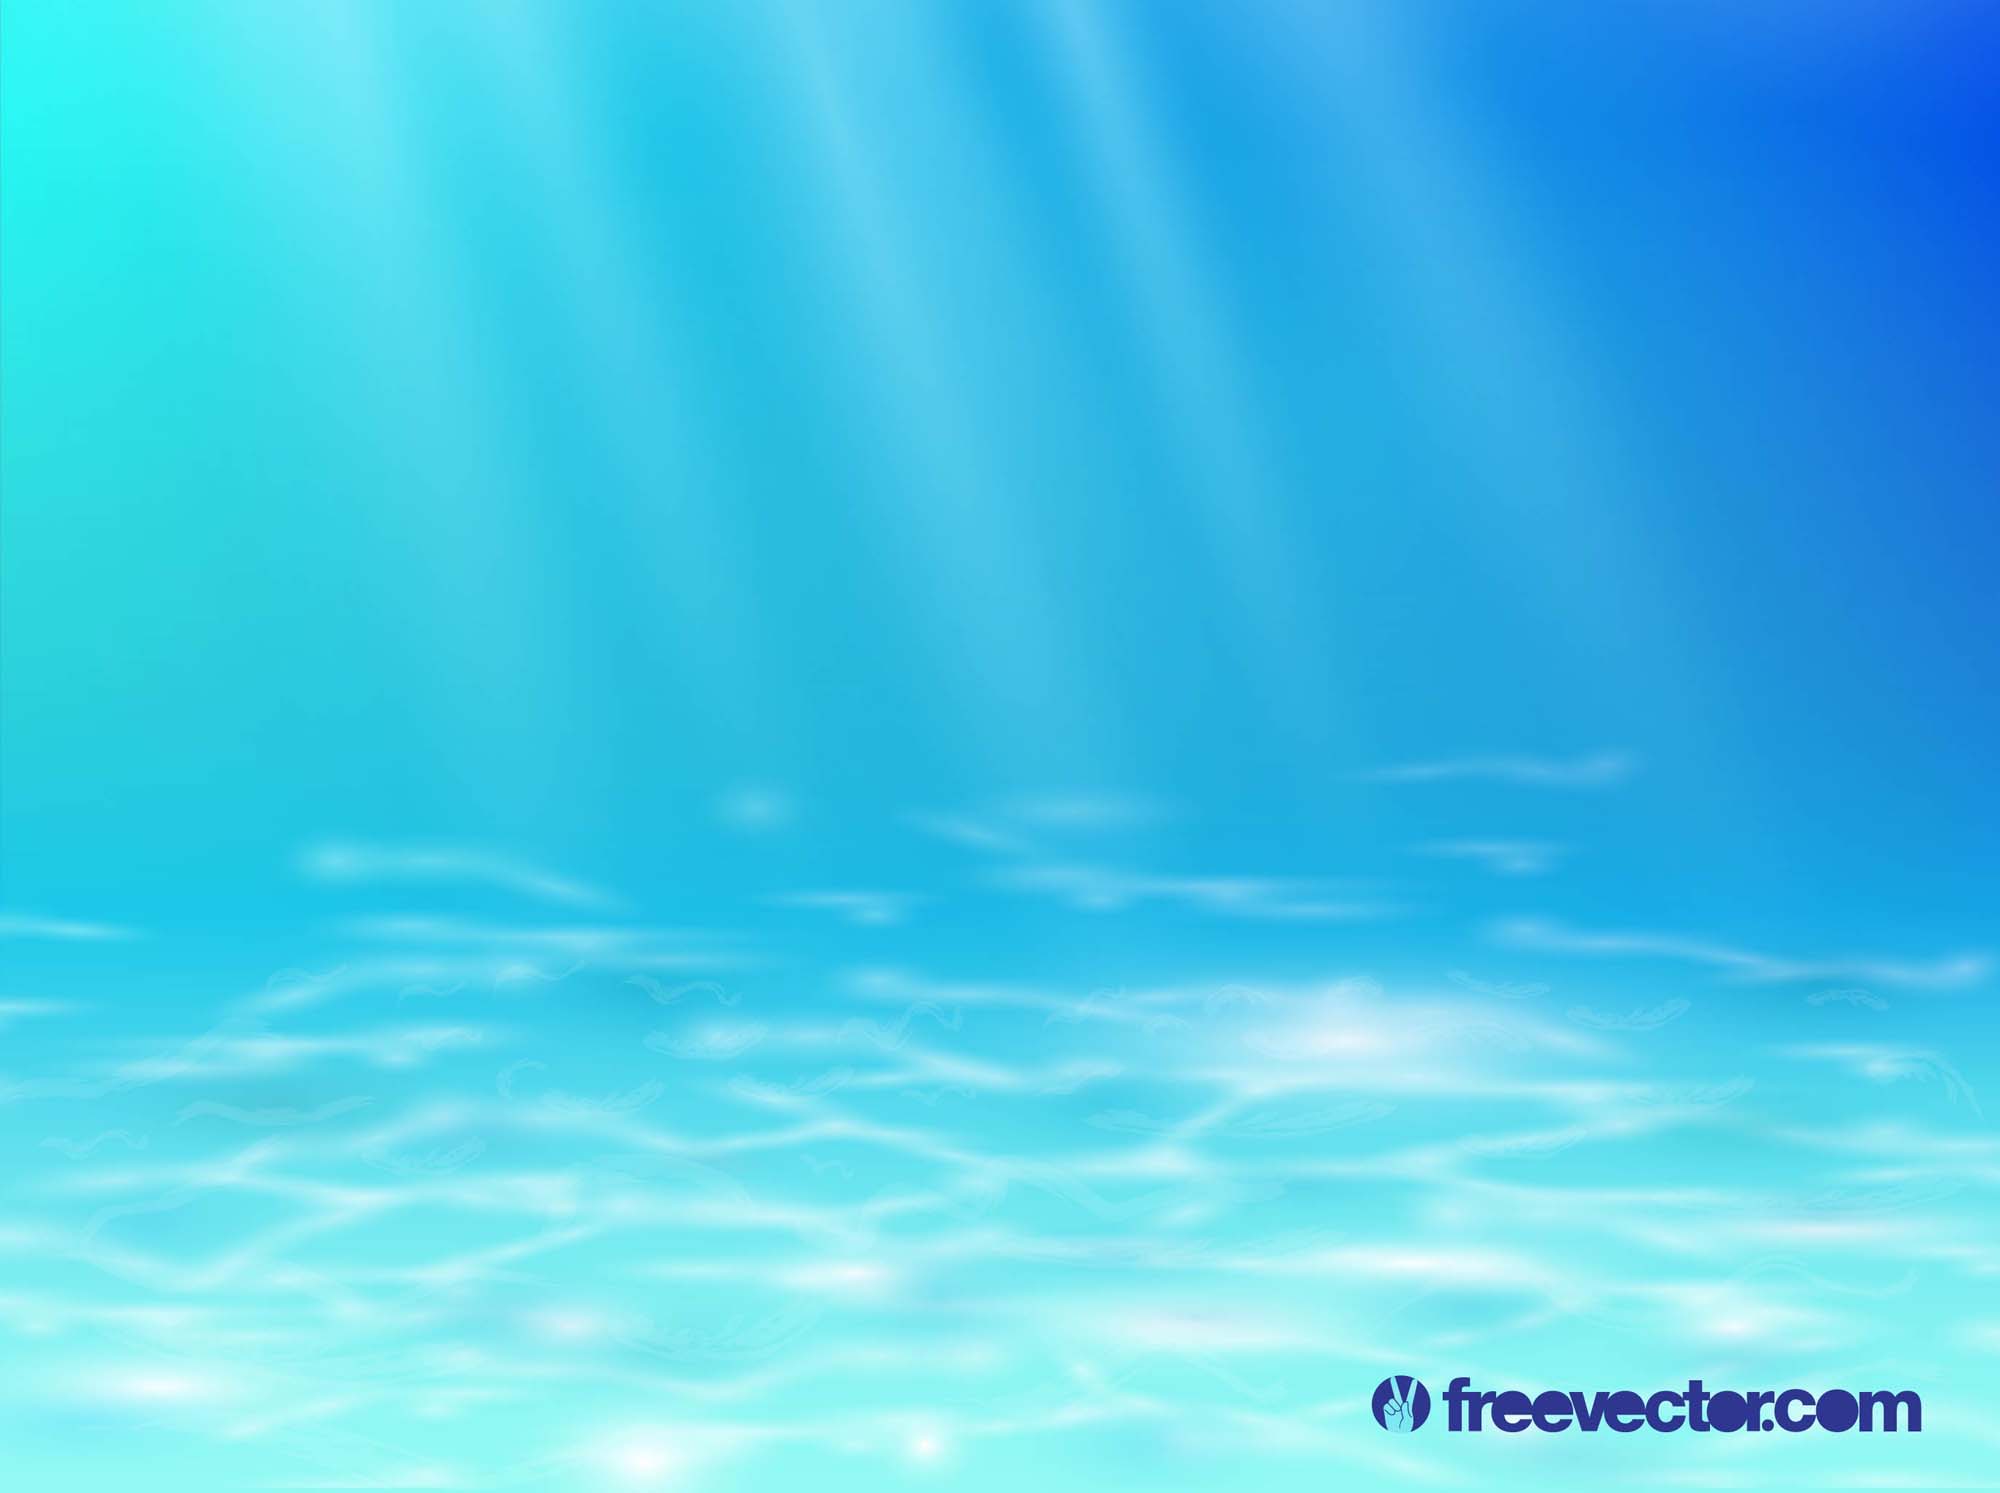 Realistic Underwater Illustration Vector Art & Graphics | freevector.com